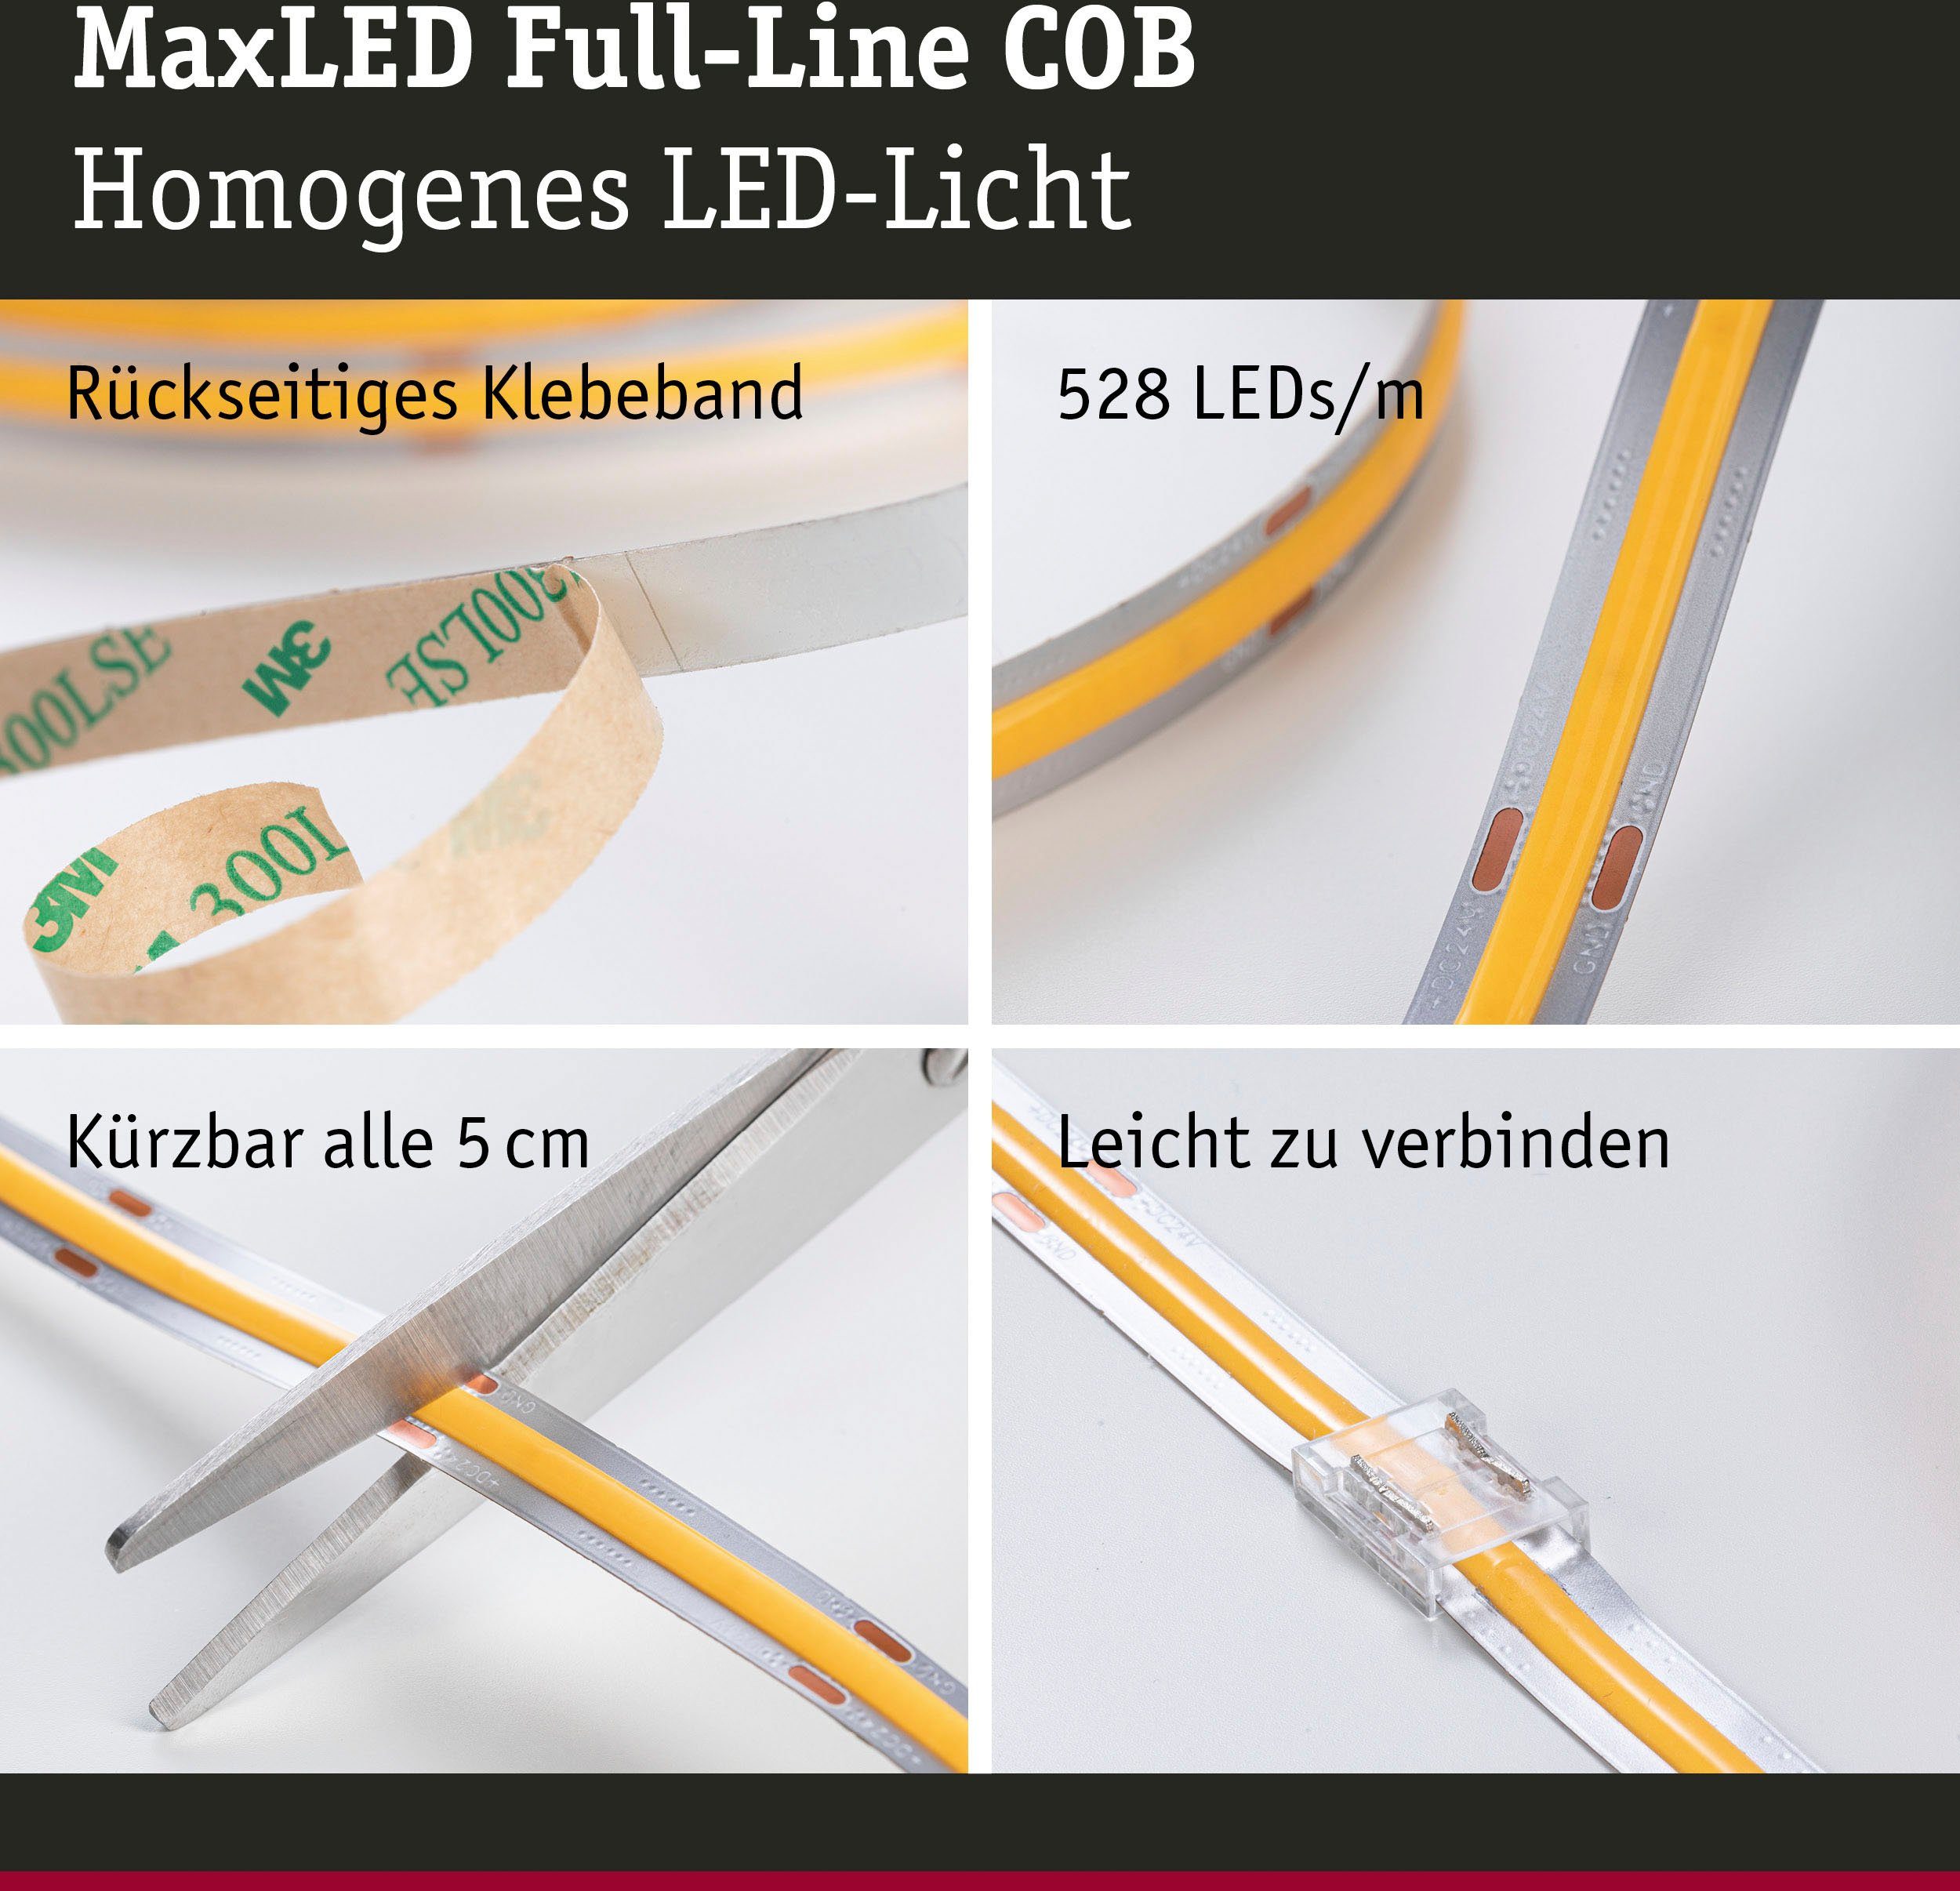 MaxLED Einzelstripe 1-flammig Full-Line Warmweiß 1250lm 2,5m COB LED-Streifen Paulmann 2700K, 15W 500